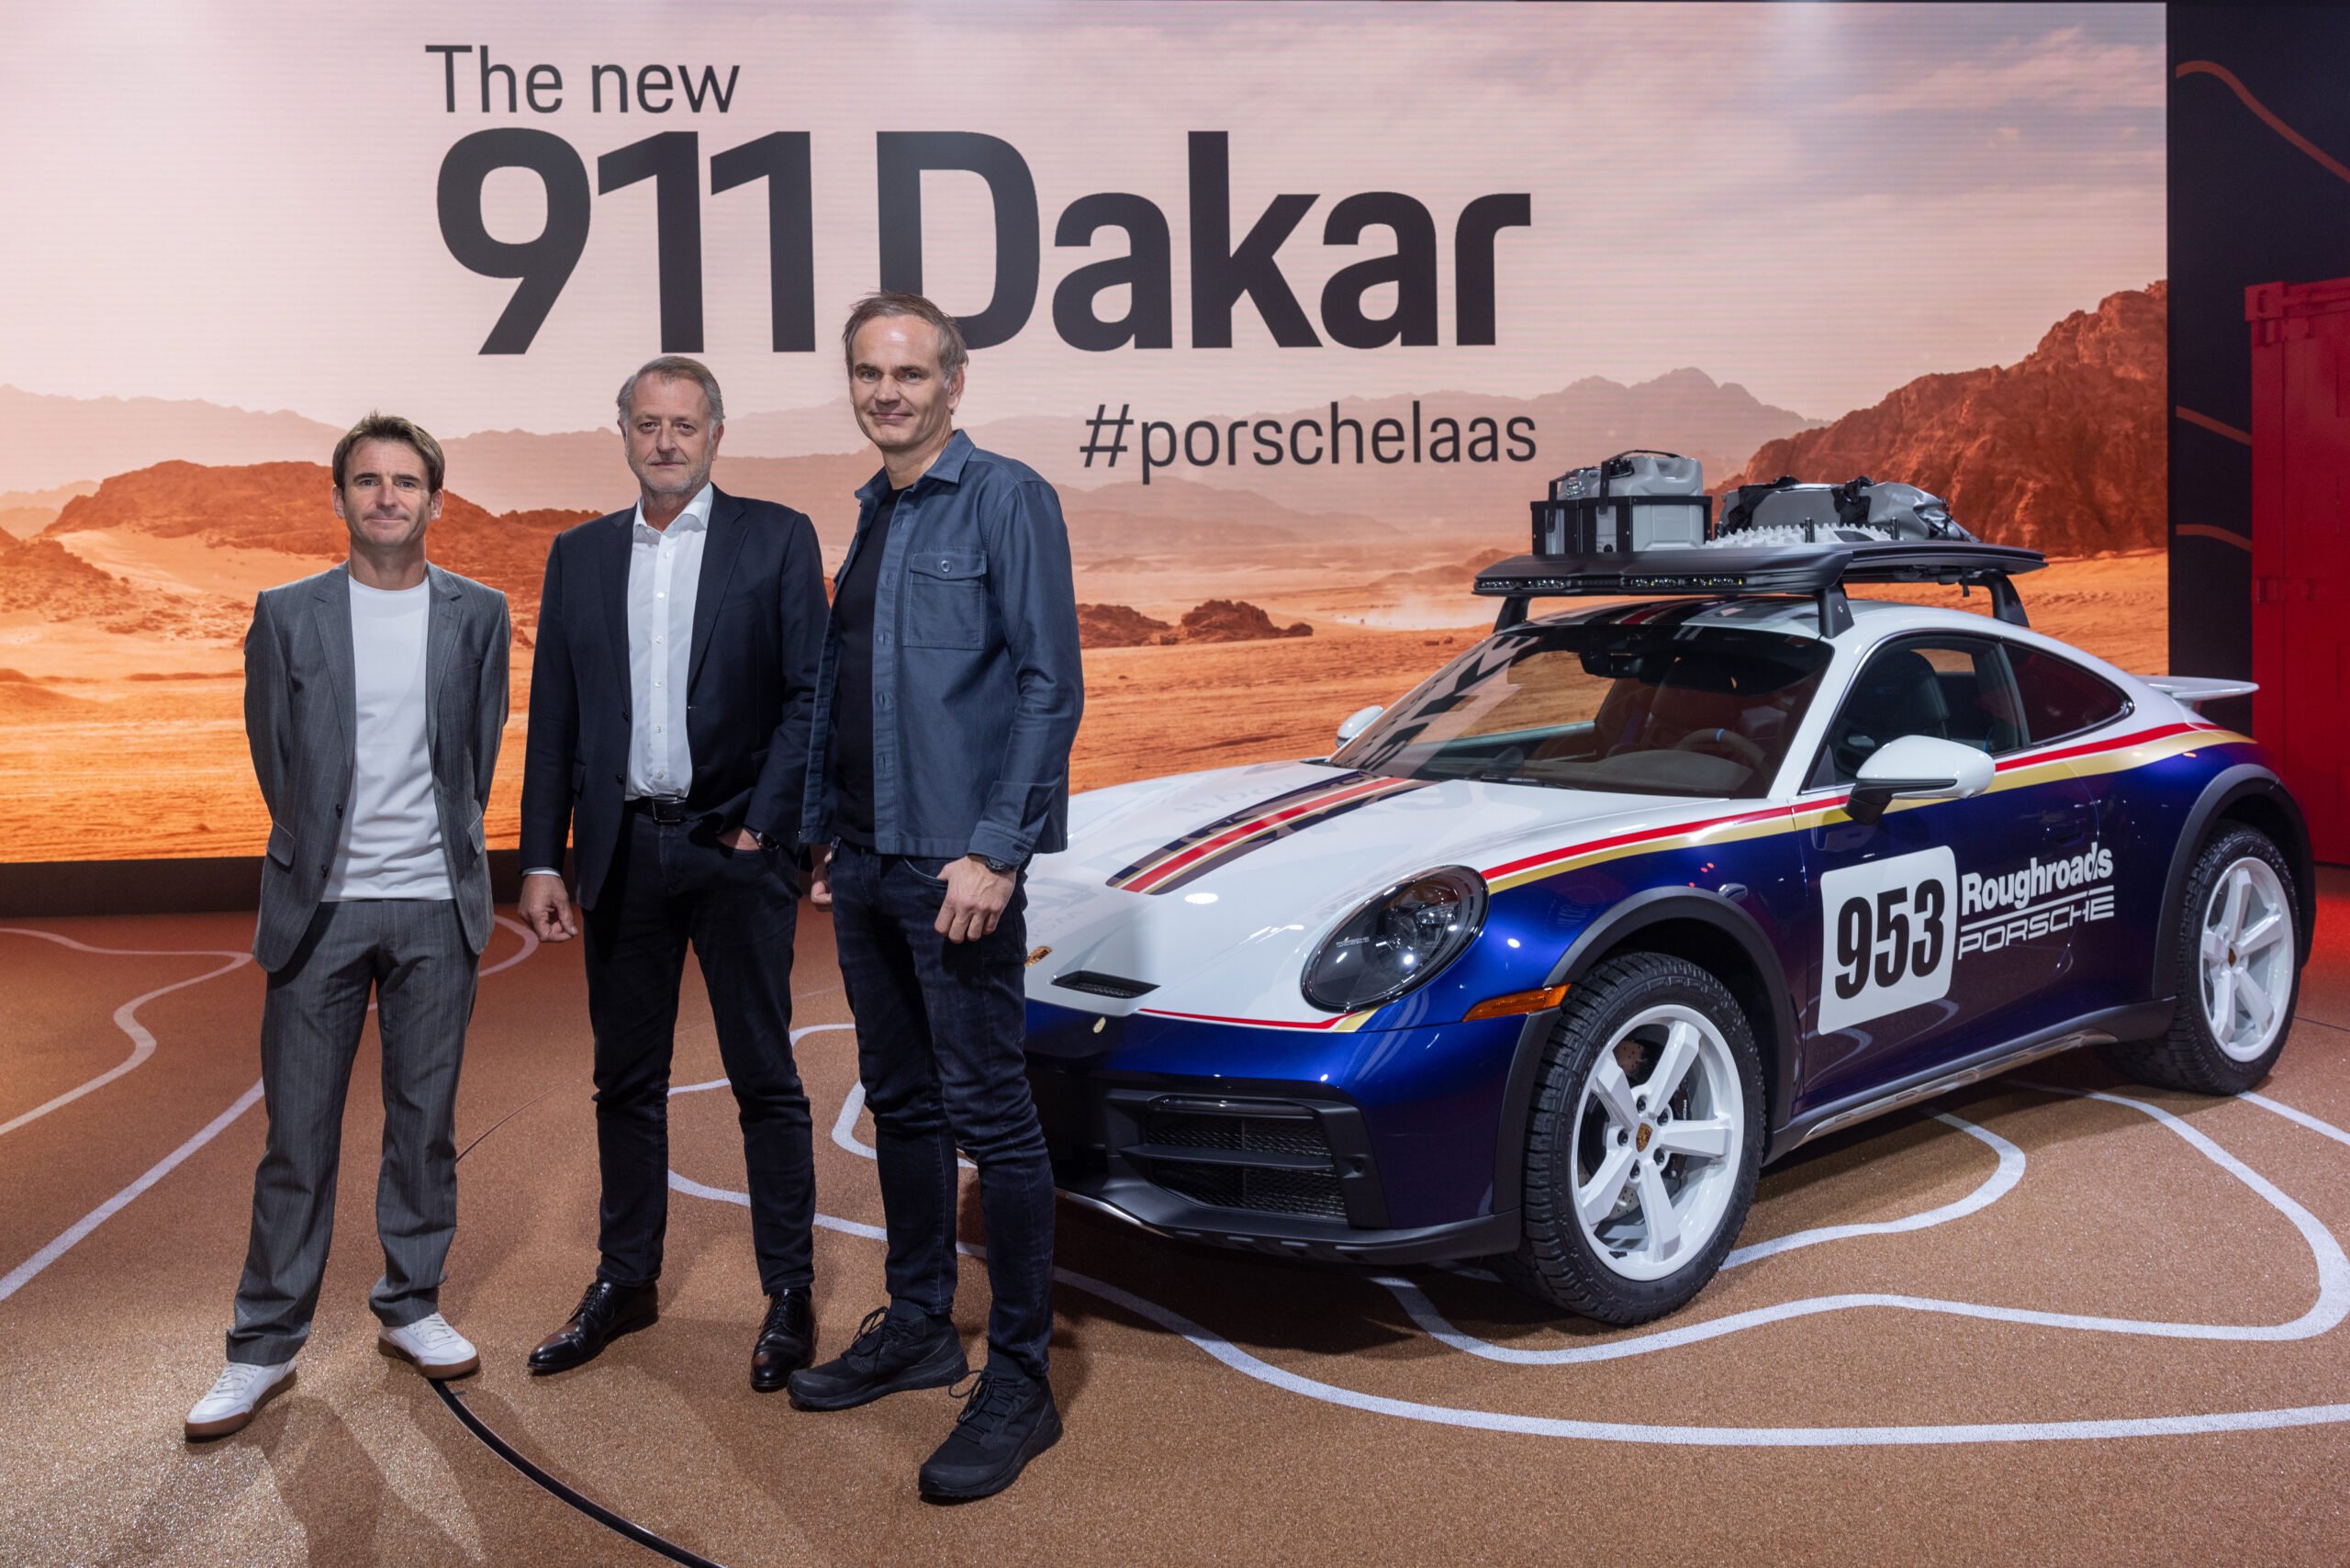 Off-road sports car with the genes of a winner: The new Porsche 911 Dakar